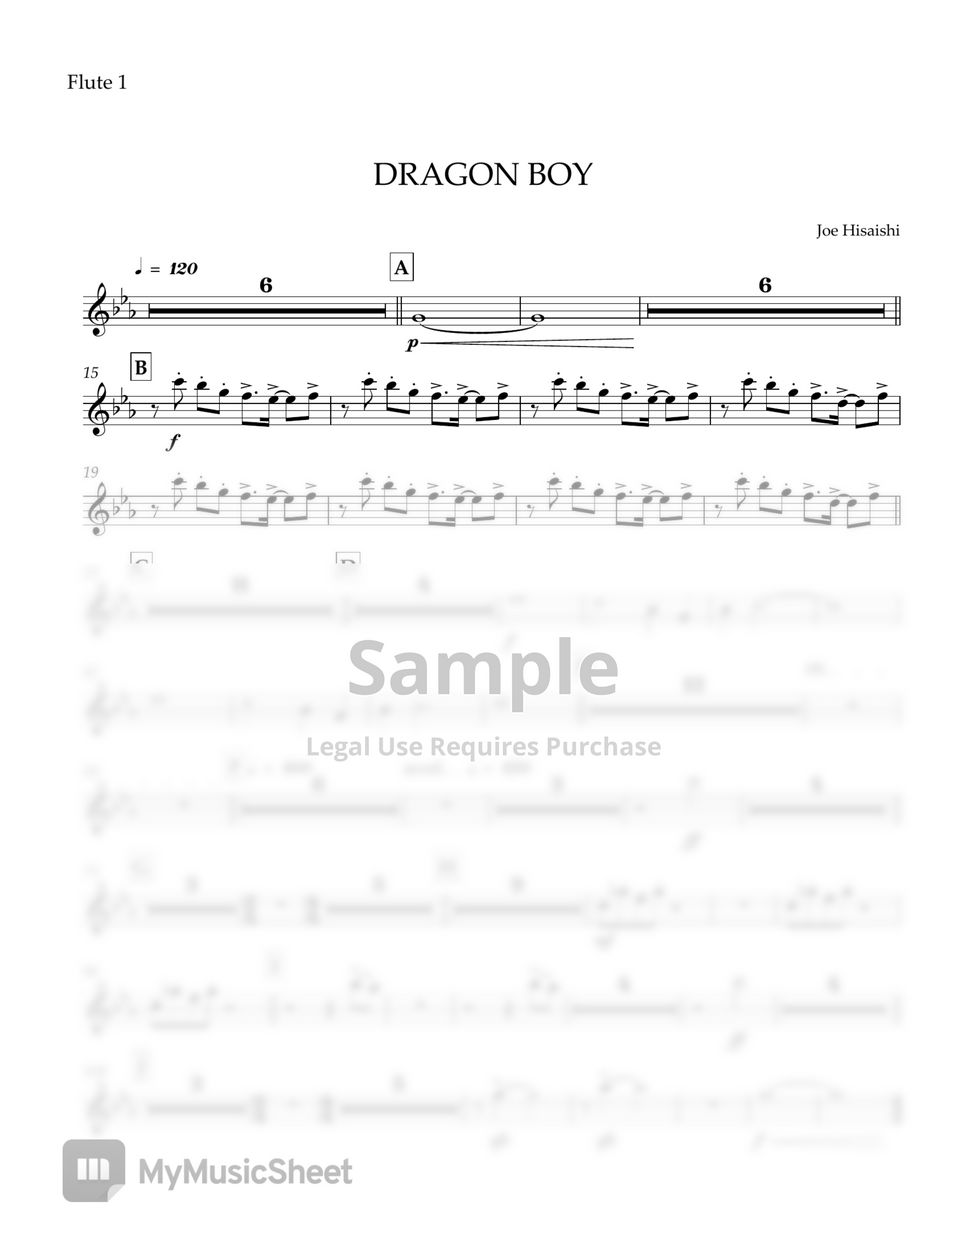 Joe Hisaishi - Dragon boy - set of parts (Full Orchestra) by Hai Mai